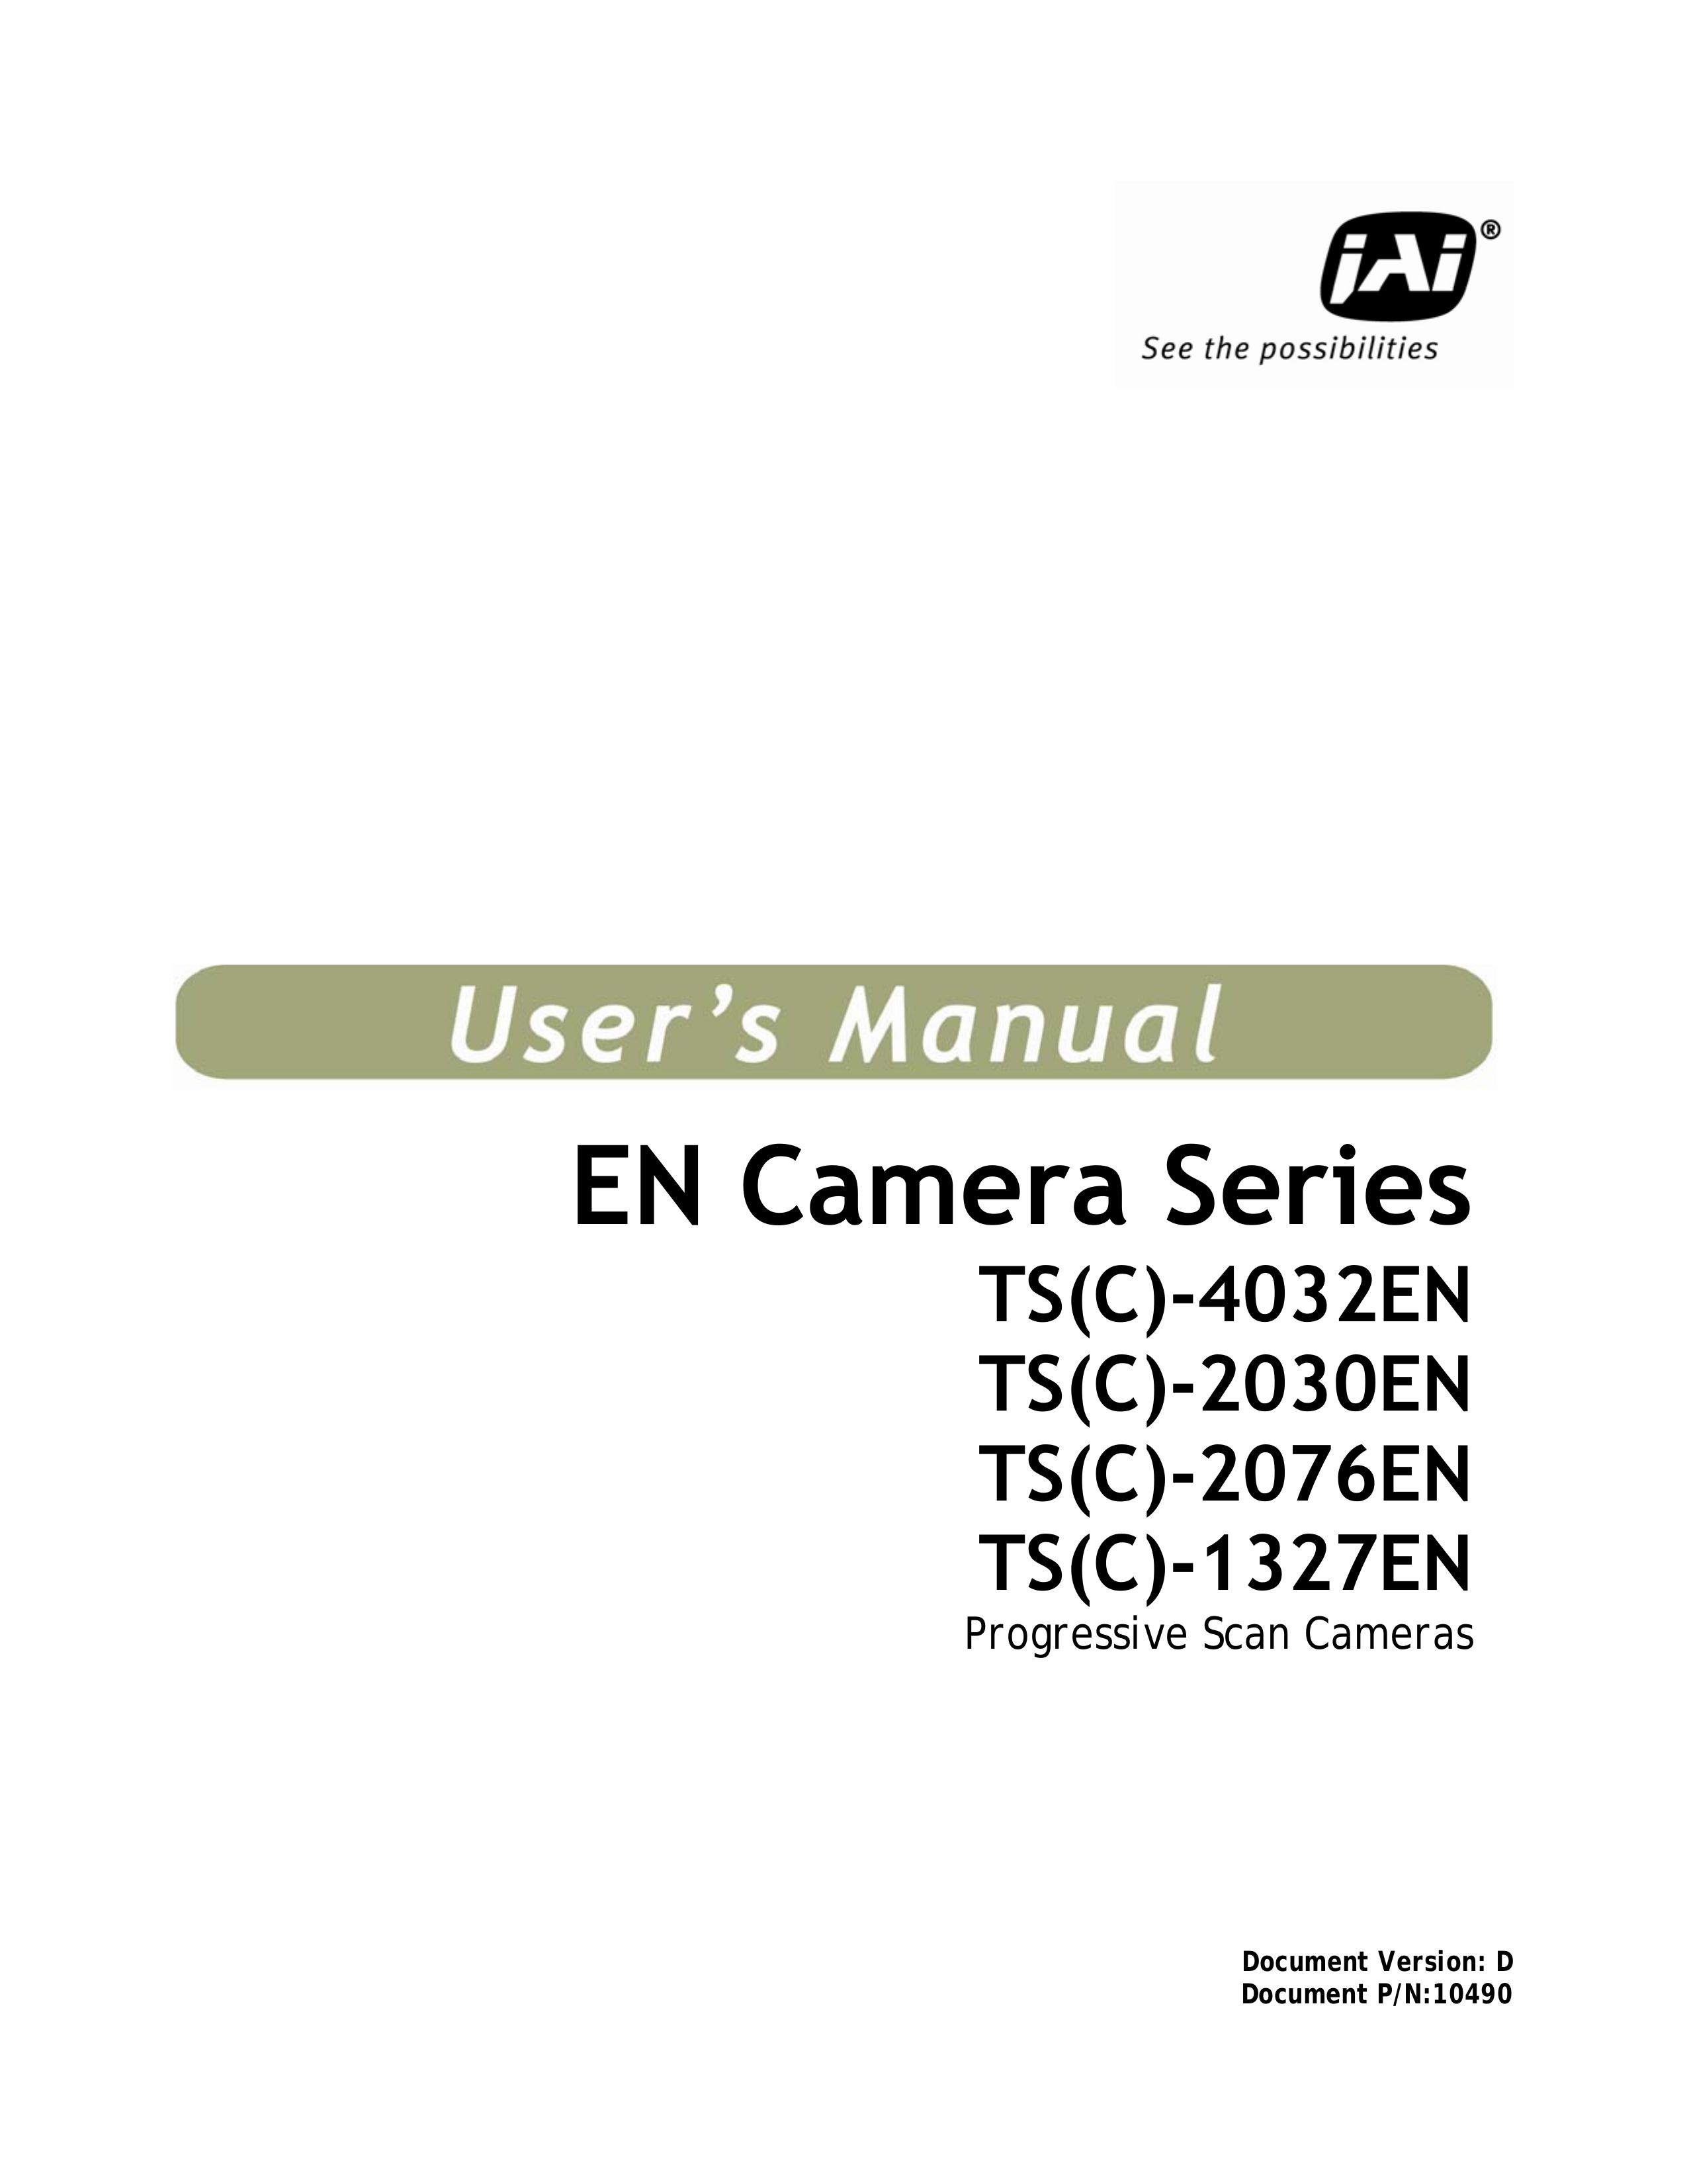 JAI TS(C)-2076EN Digital Camera User Manual